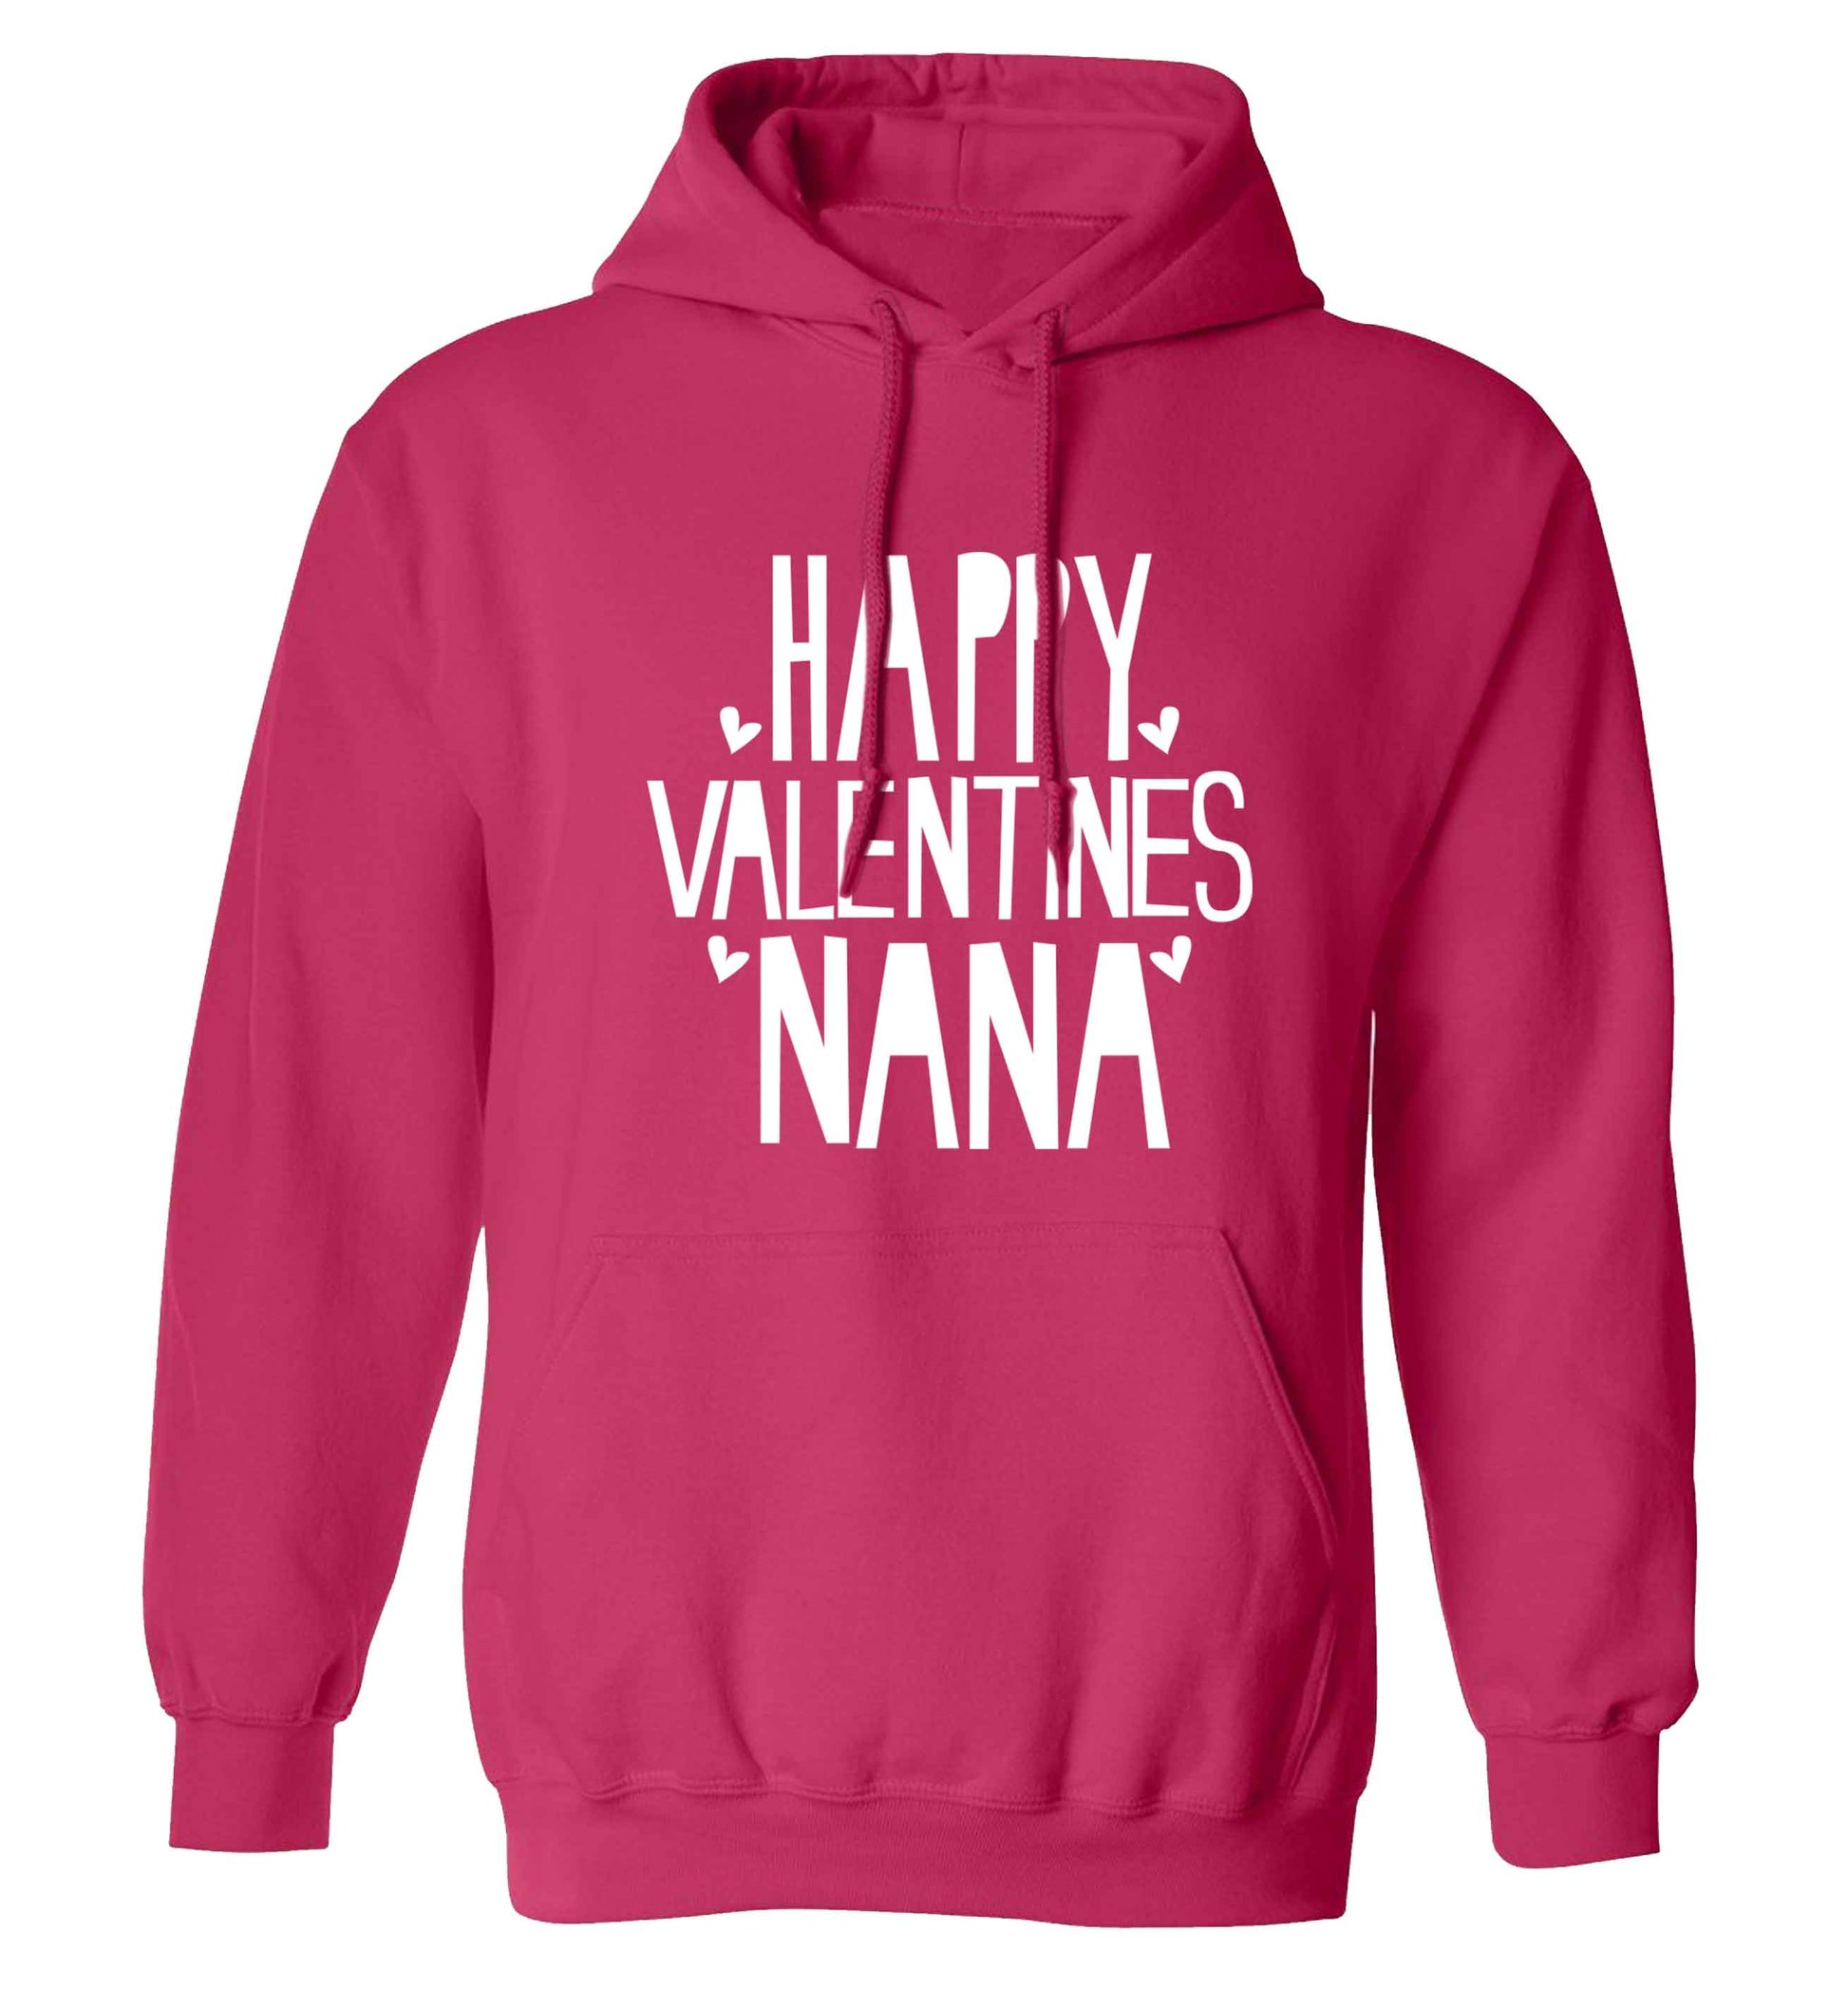 Happy valentines nana adults unisex pink hoodie 2XL